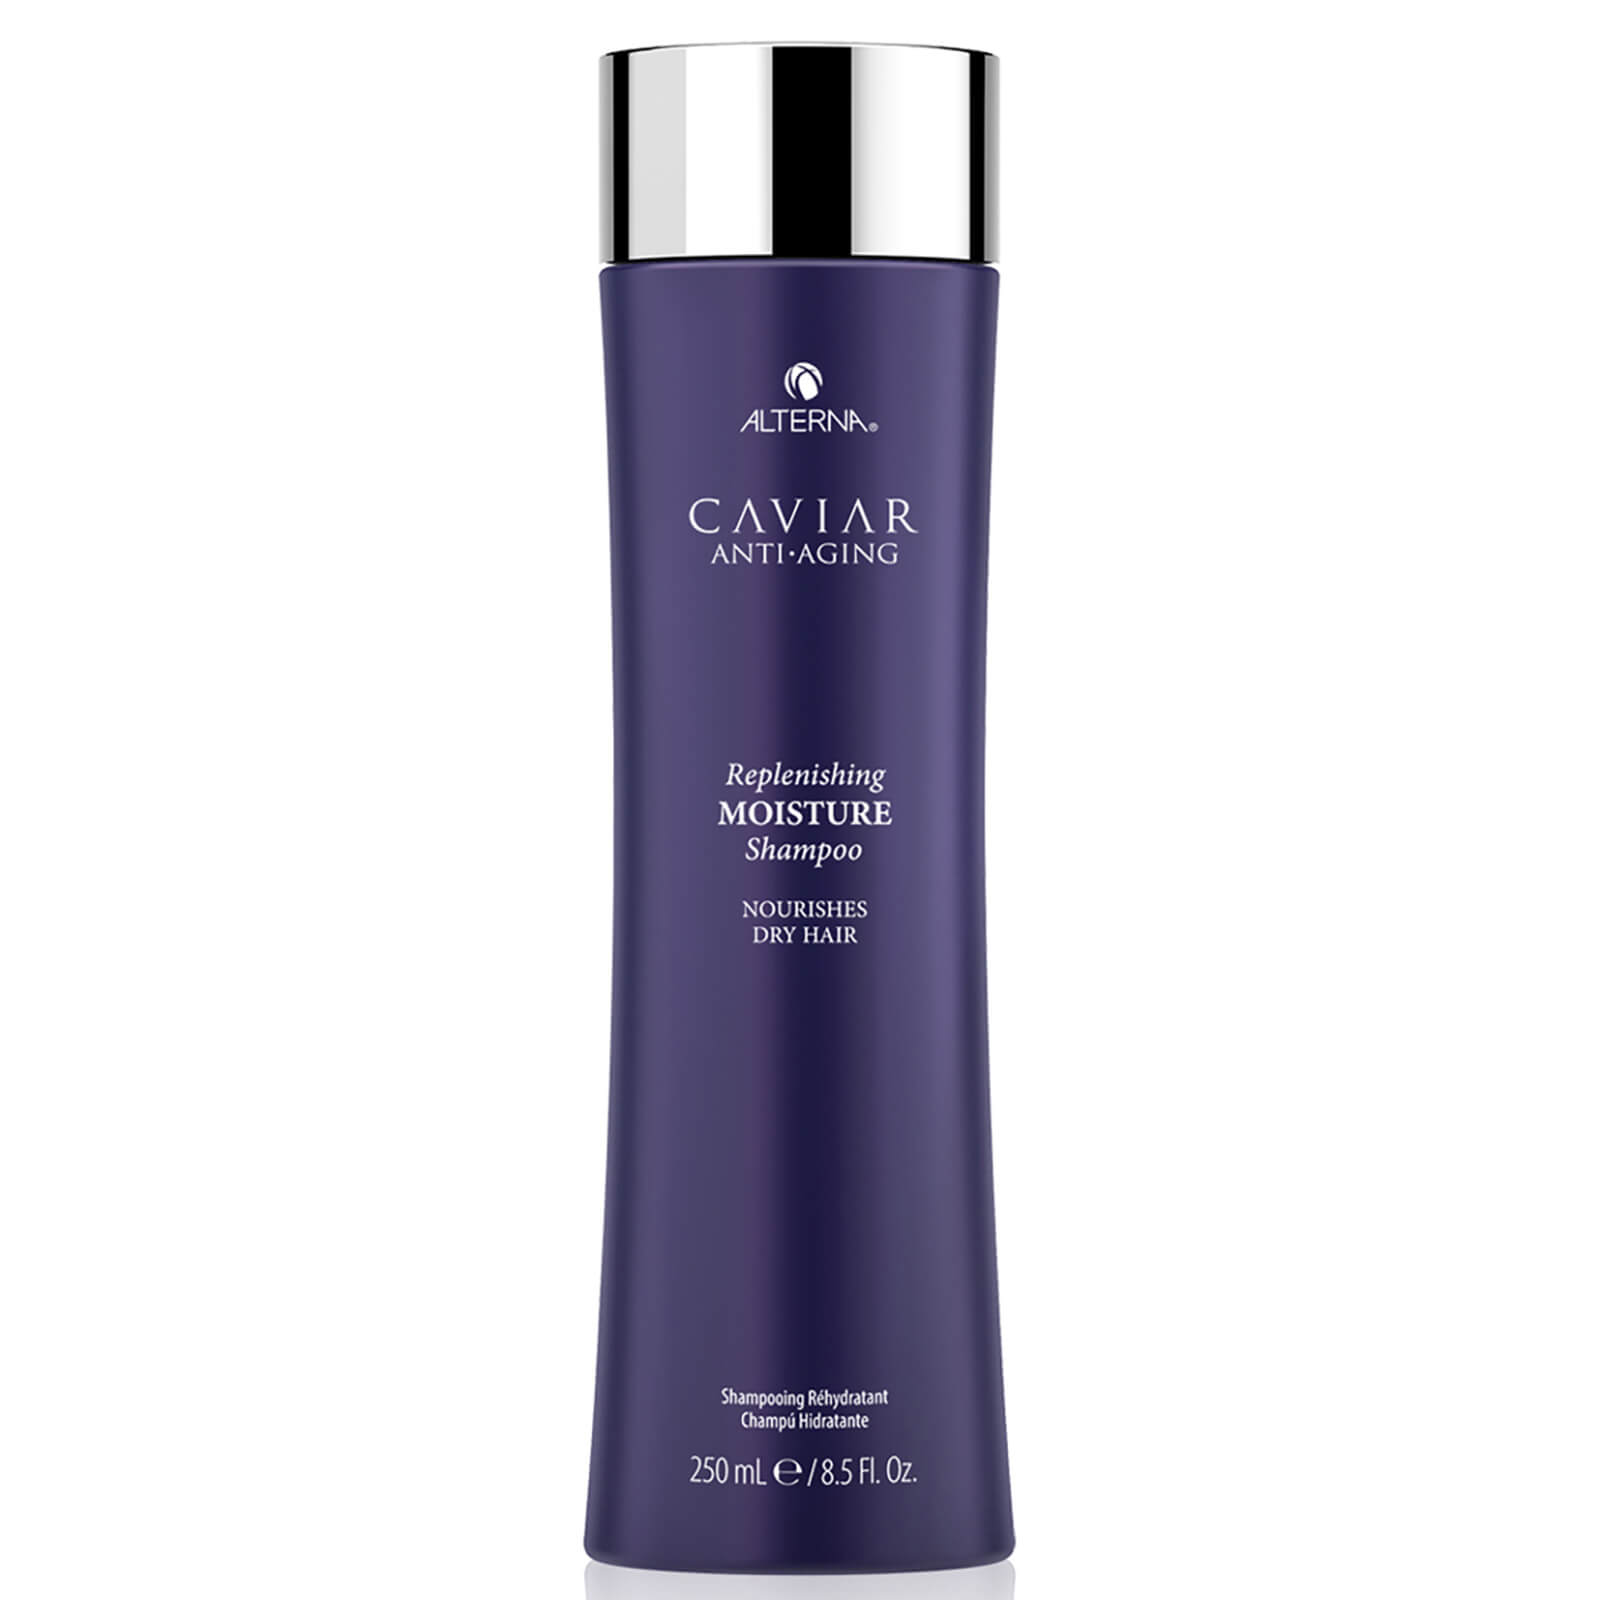 Alterna Caviar Anti-Aging Replenishing Moisture Shampoo (8.5oz) lookfantastic.com imagine